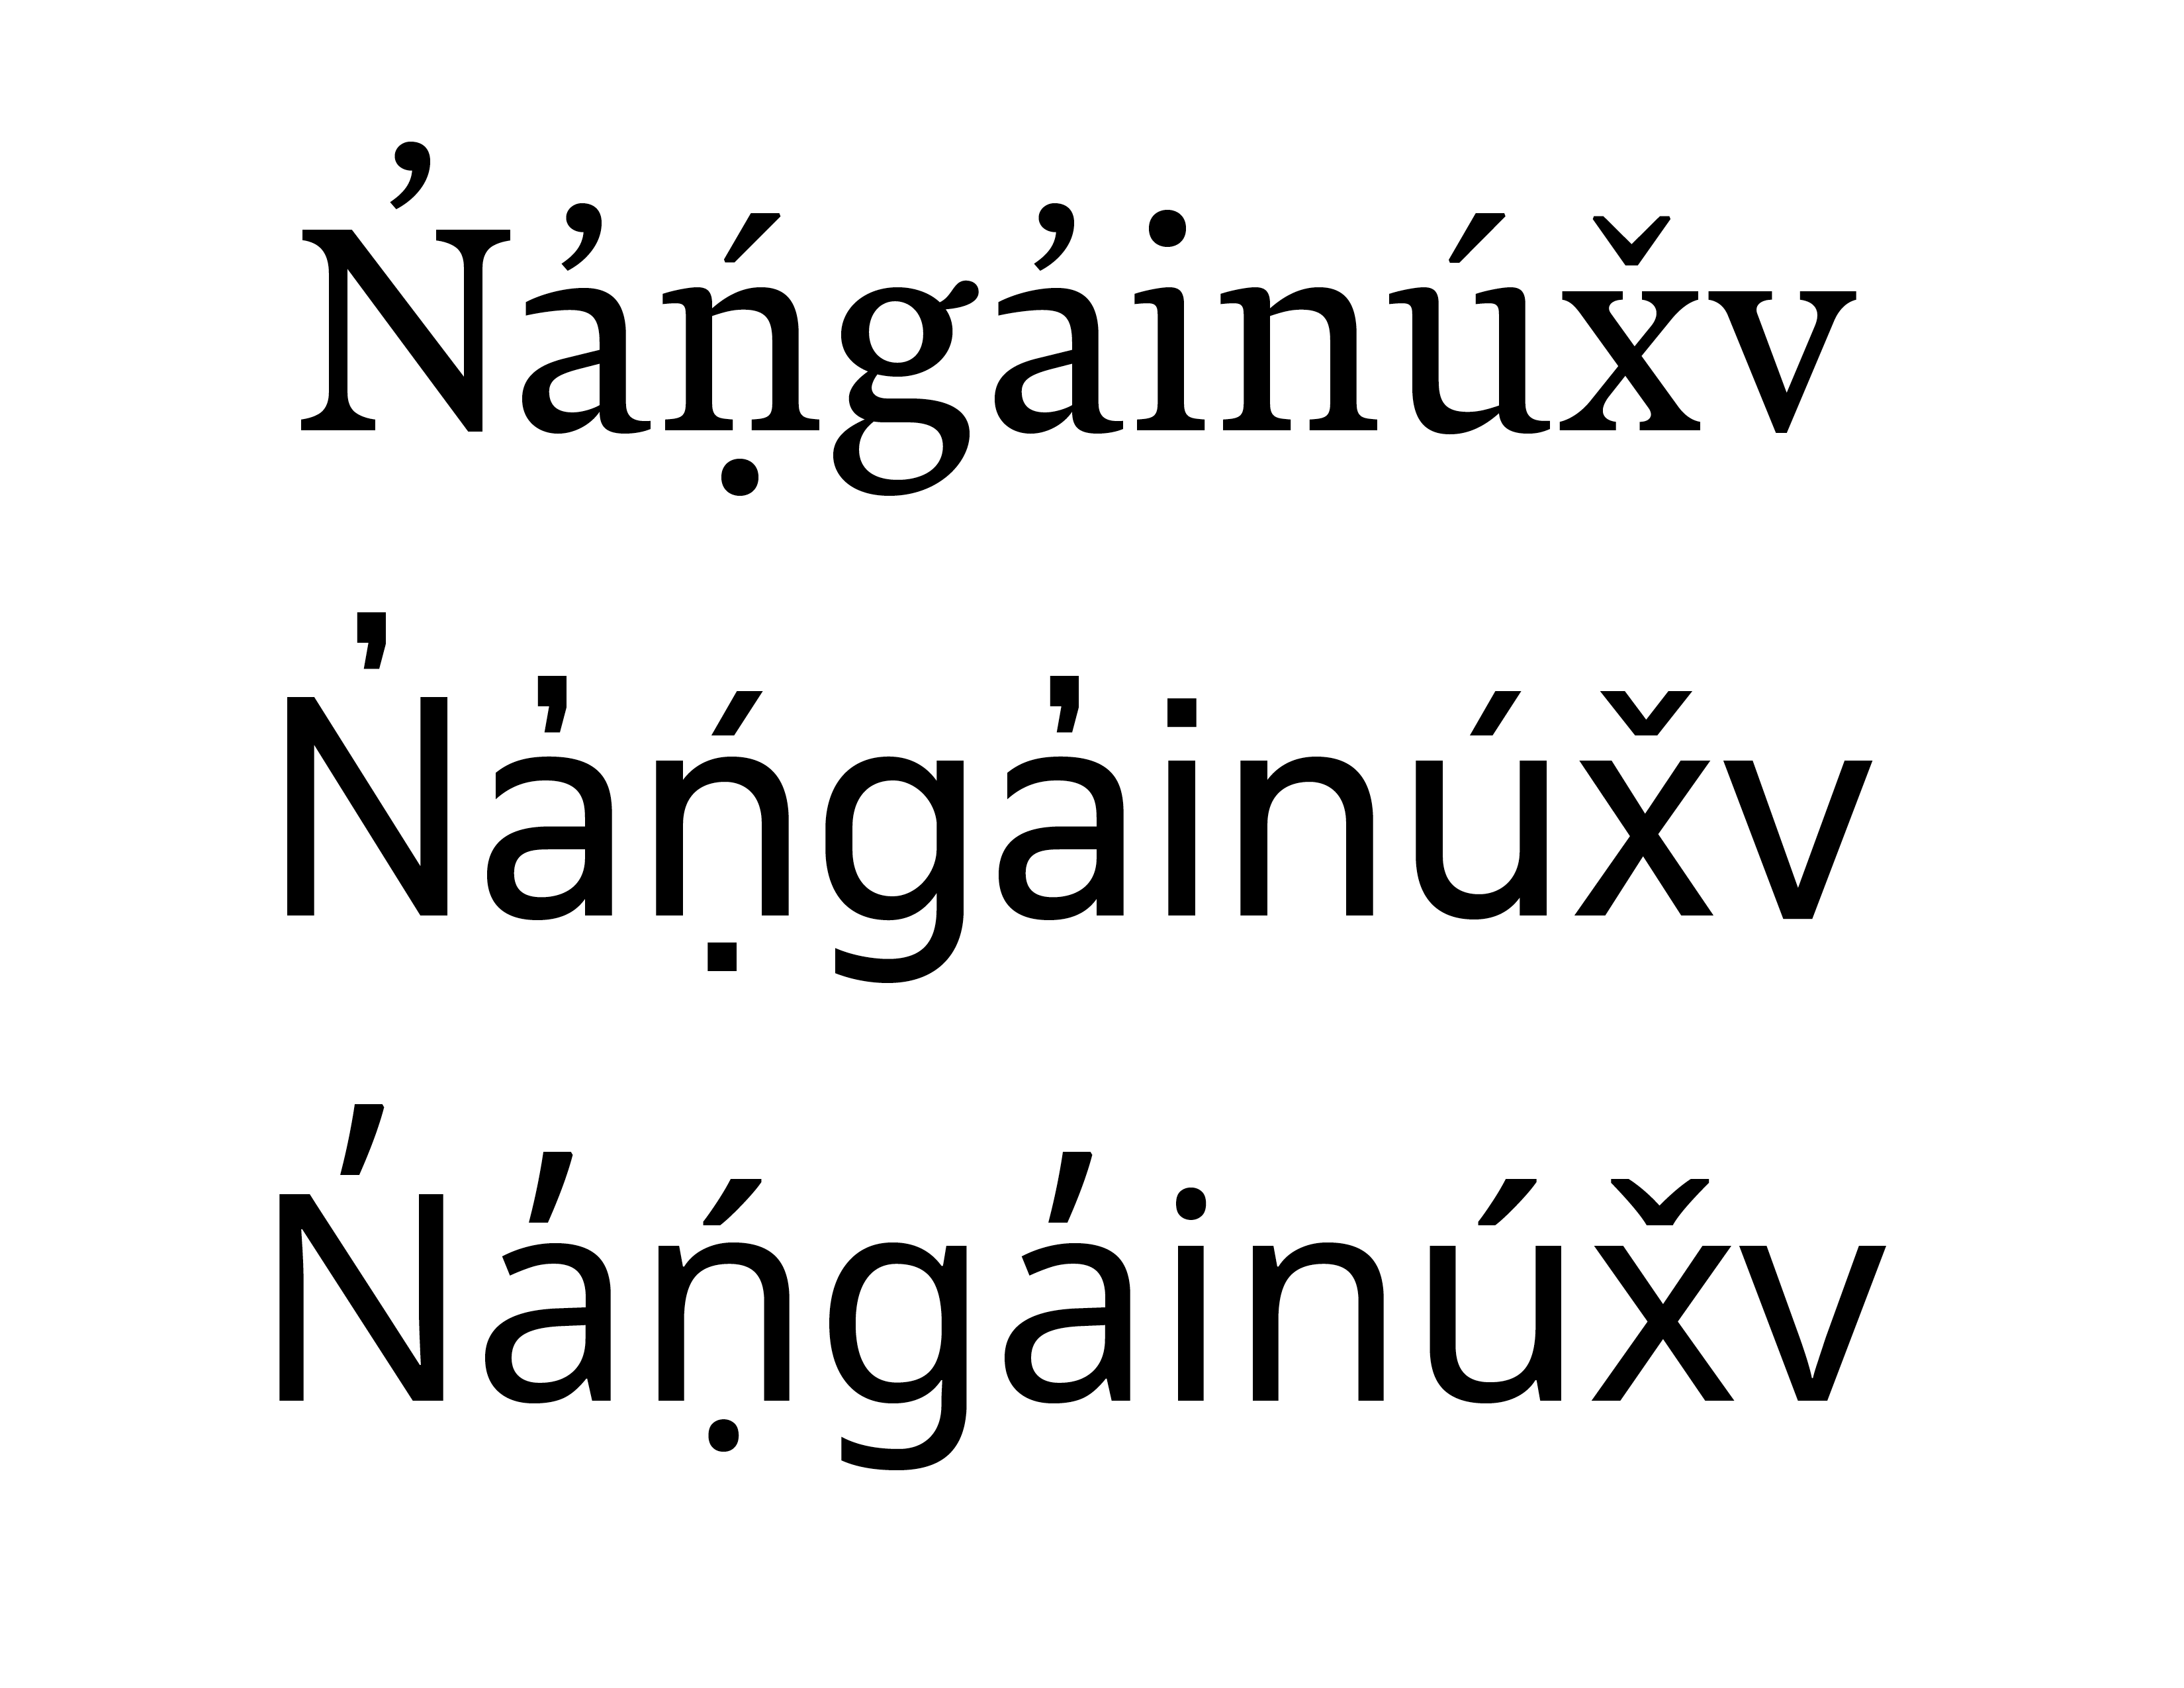 diacritic representation